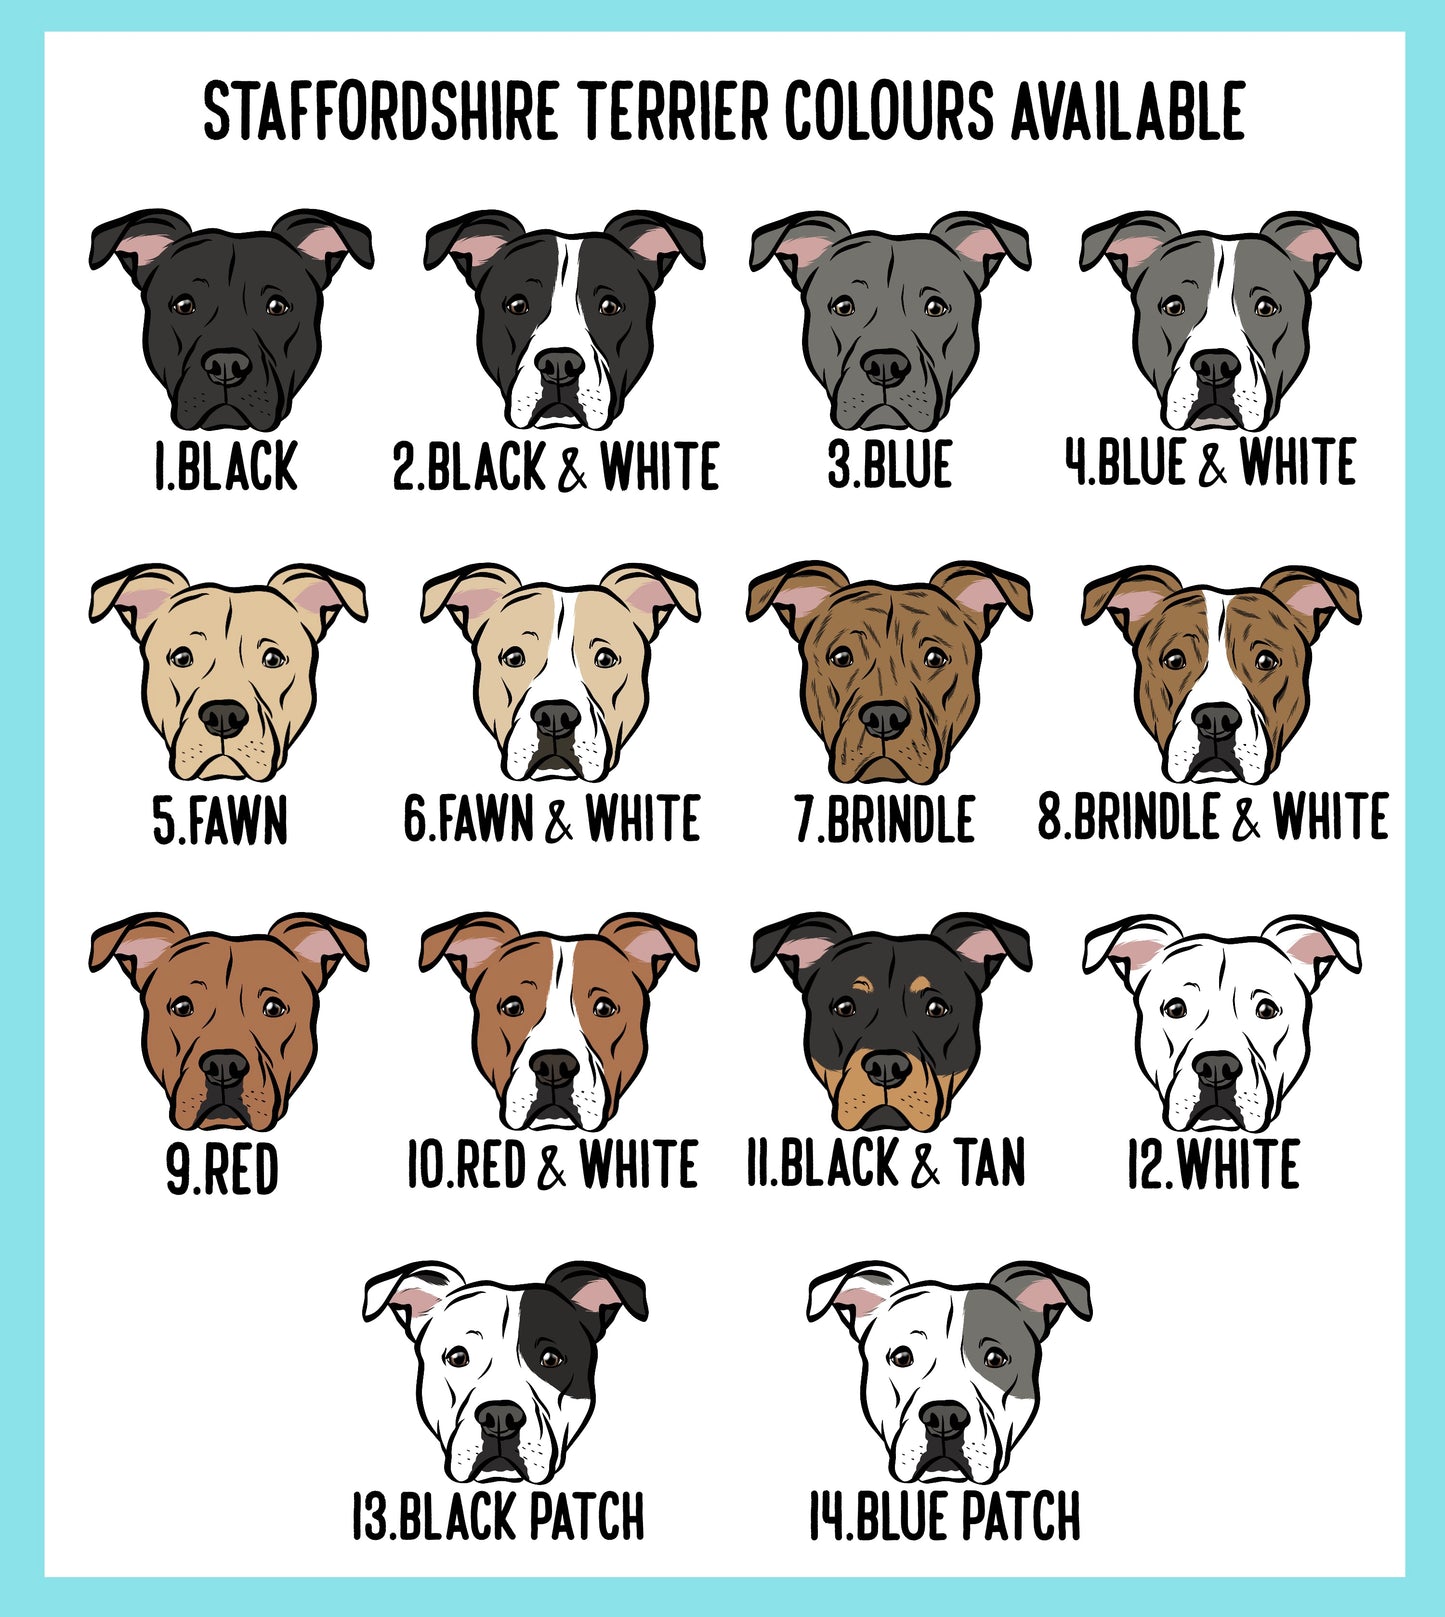 Staffordshire Bull Terrier Baby Onesie